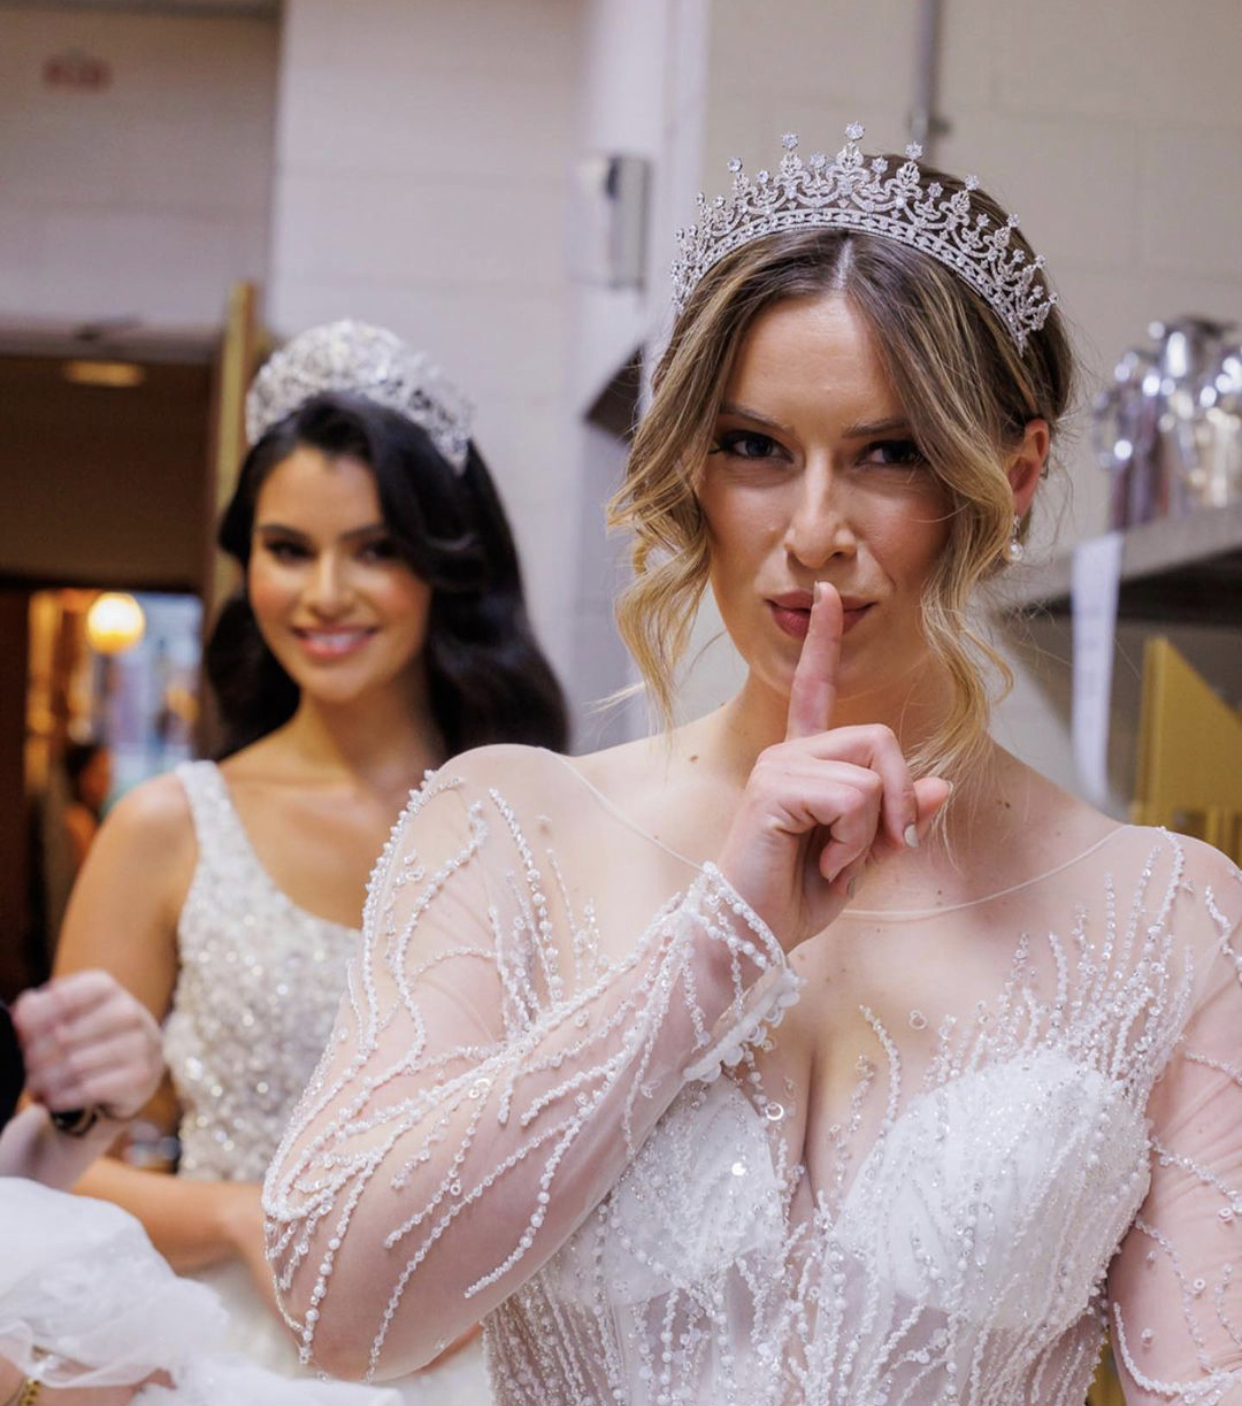 Princess Bride Crown|Odessa|Jeanette Maree|Shop Online